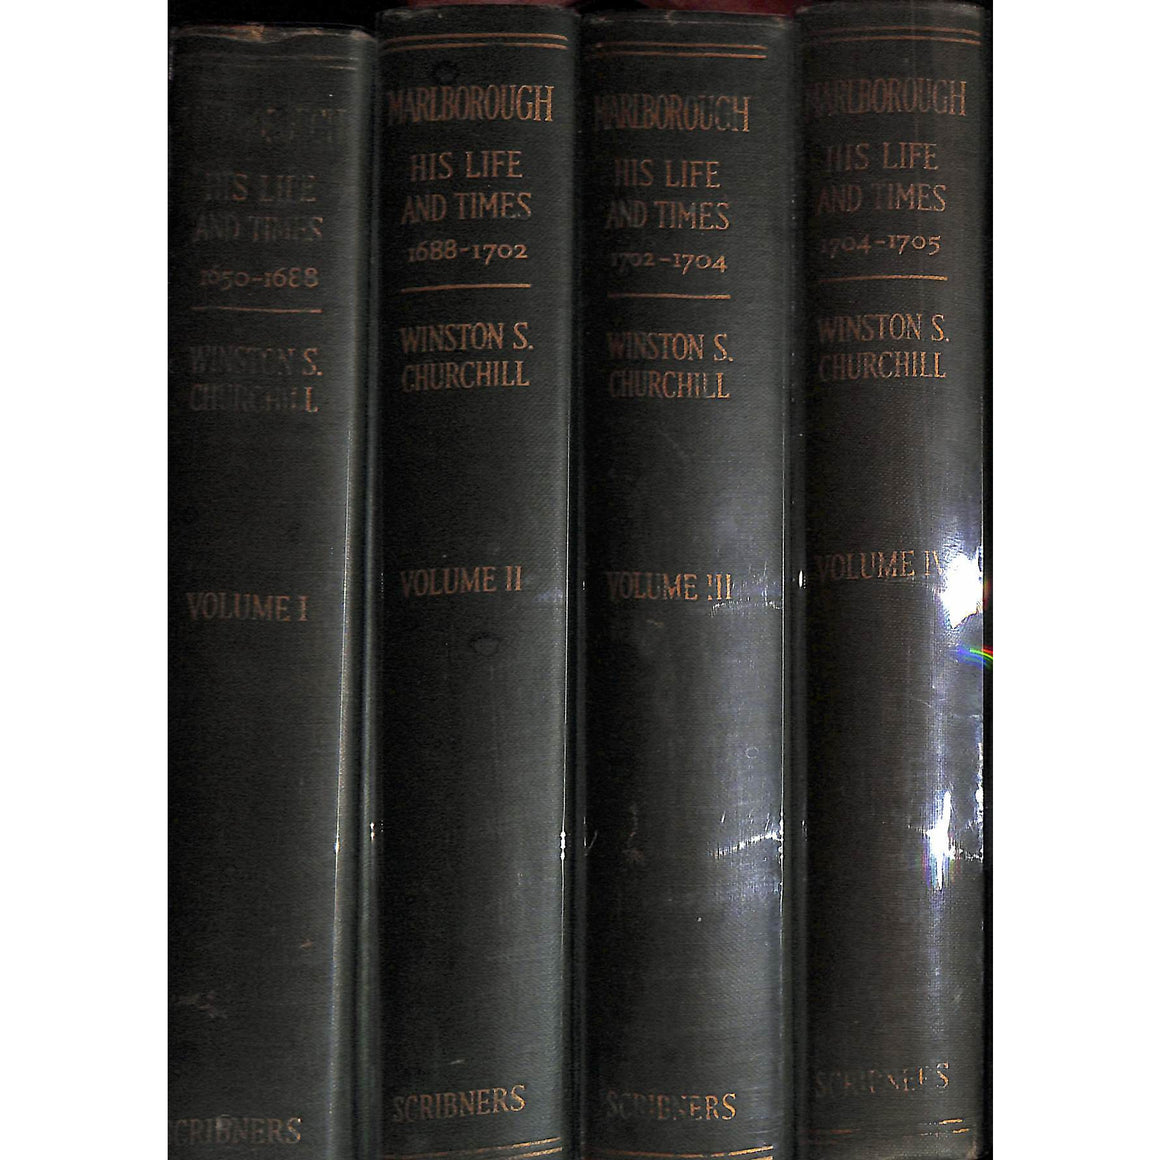 Marlborough: His Life and Times (4 Volume Set)